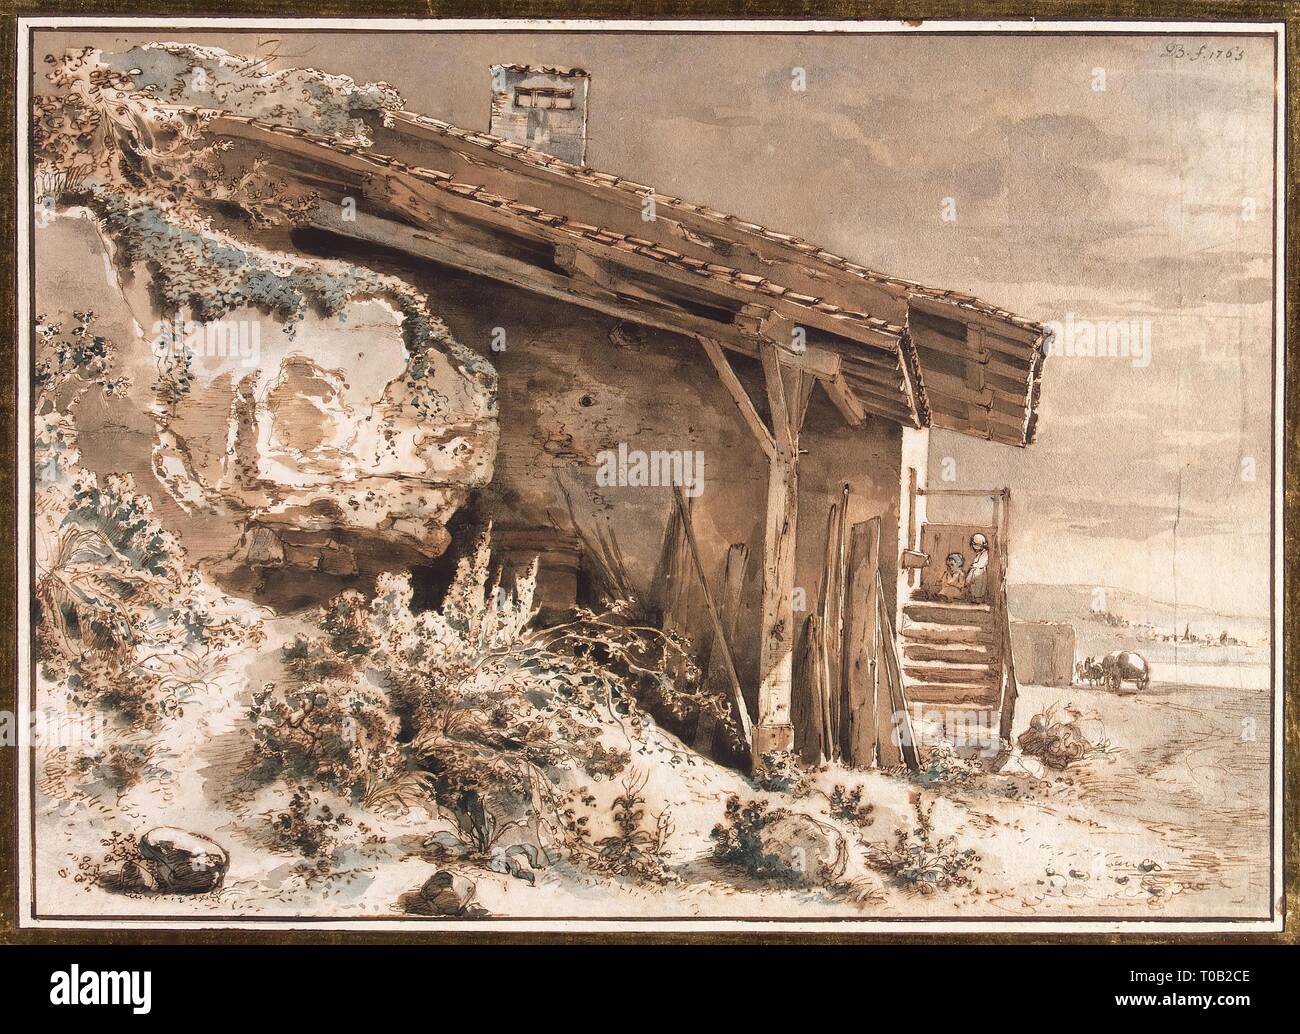 "Hütte am Ufer eines Flusses". Frankreich, 1763. Abmessungen: 17,8 x 24,9 cm. Museum: Staatliche Eremitage, St. Petersburg. Autor: Jean Jacques de Boissieu. Stockfoto